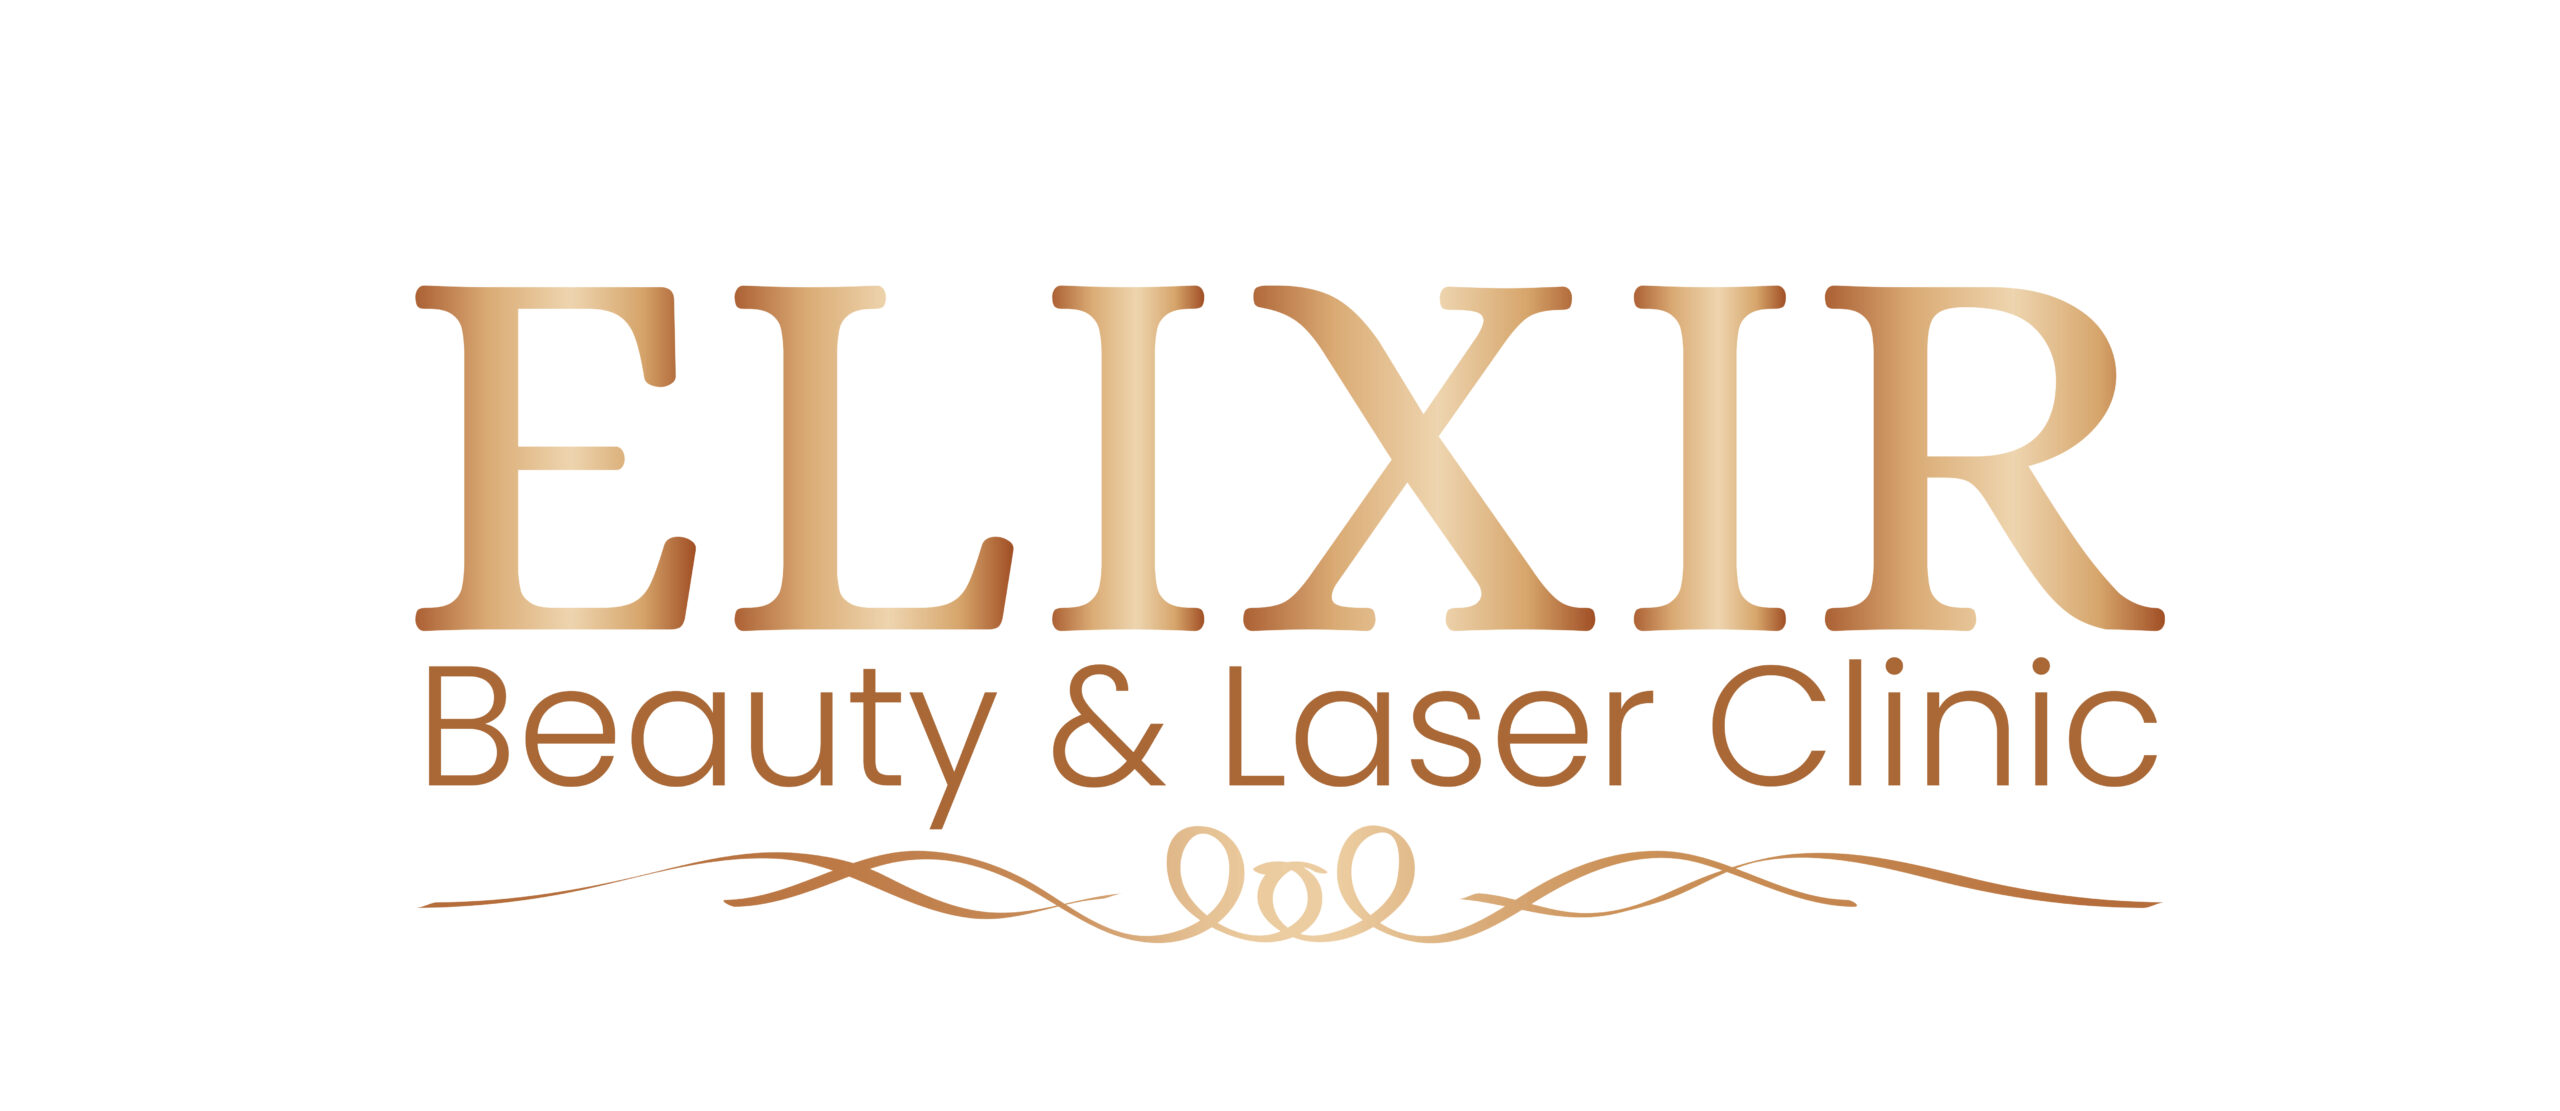 Elixir Beauty & Laser clinic